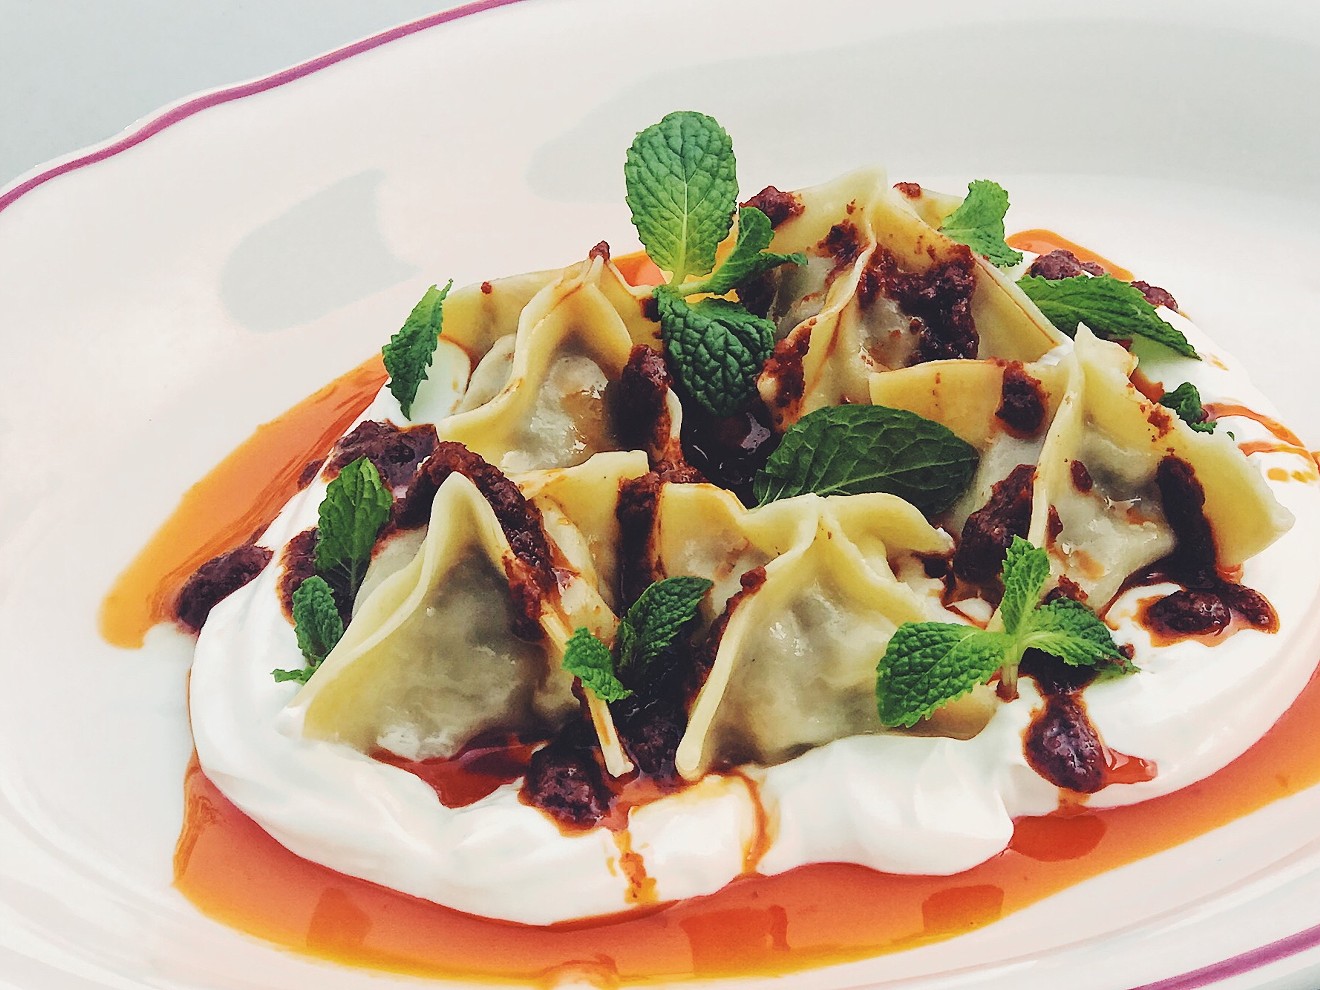 Manti (Turkish lamb dumplings with chili oil and garlic yogurt) are on Safta's menu for the month of November.